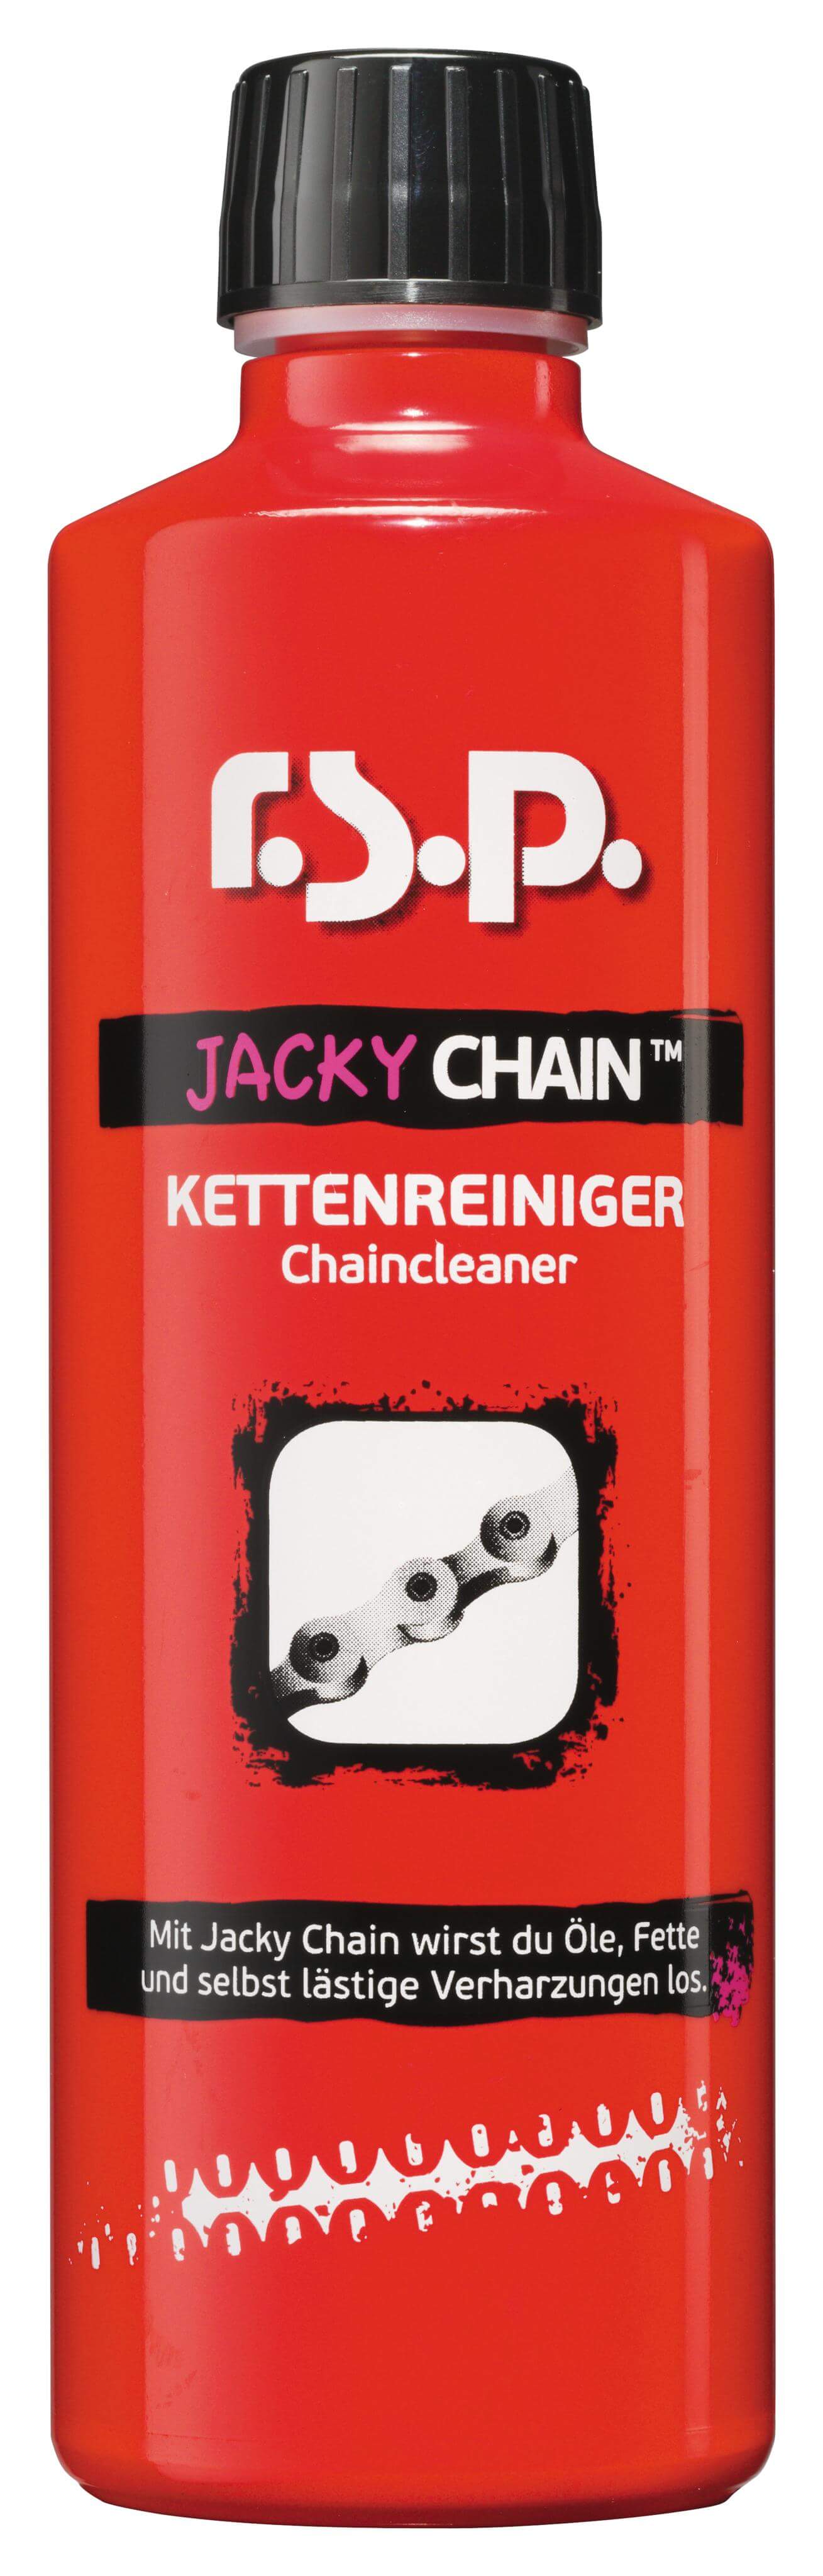 r.s.p. JACKY CHAIN (Kettenreiniger) 500ml